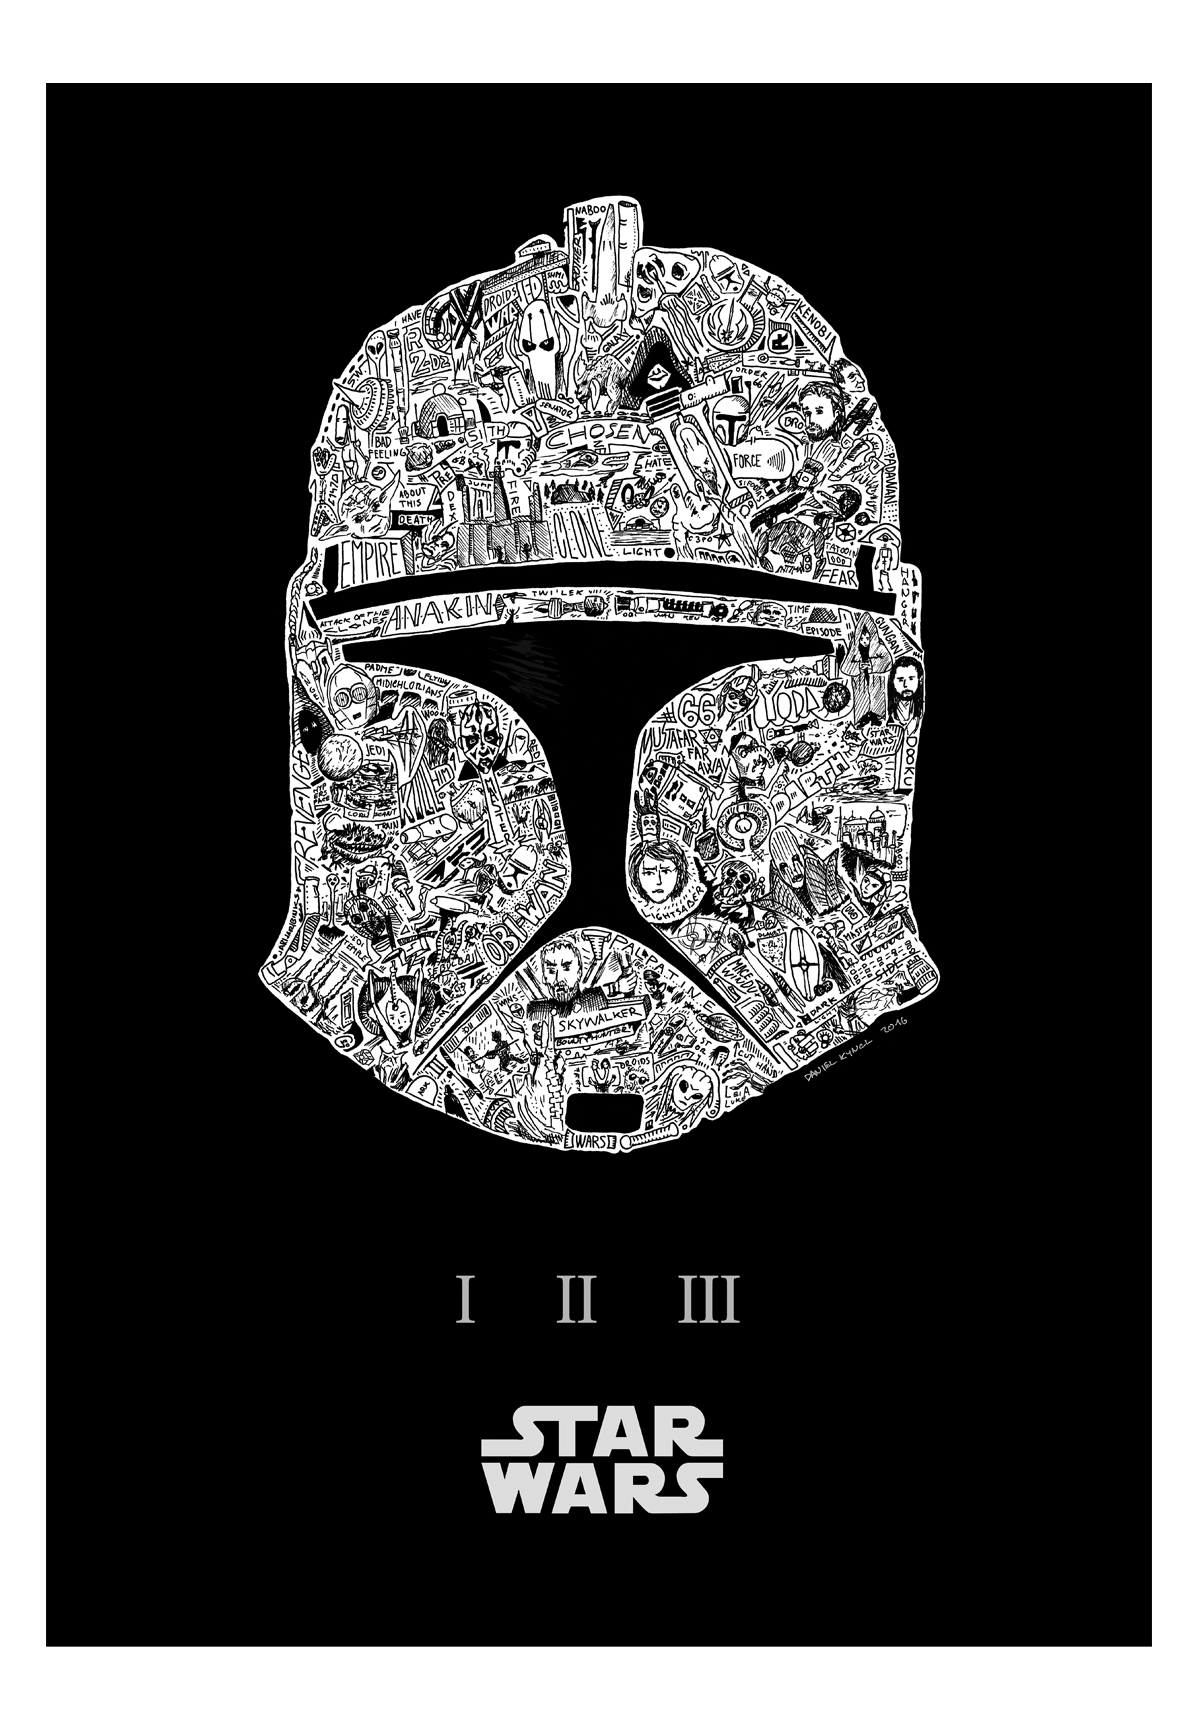 star wars poster doodle The Force Awakens trilogy